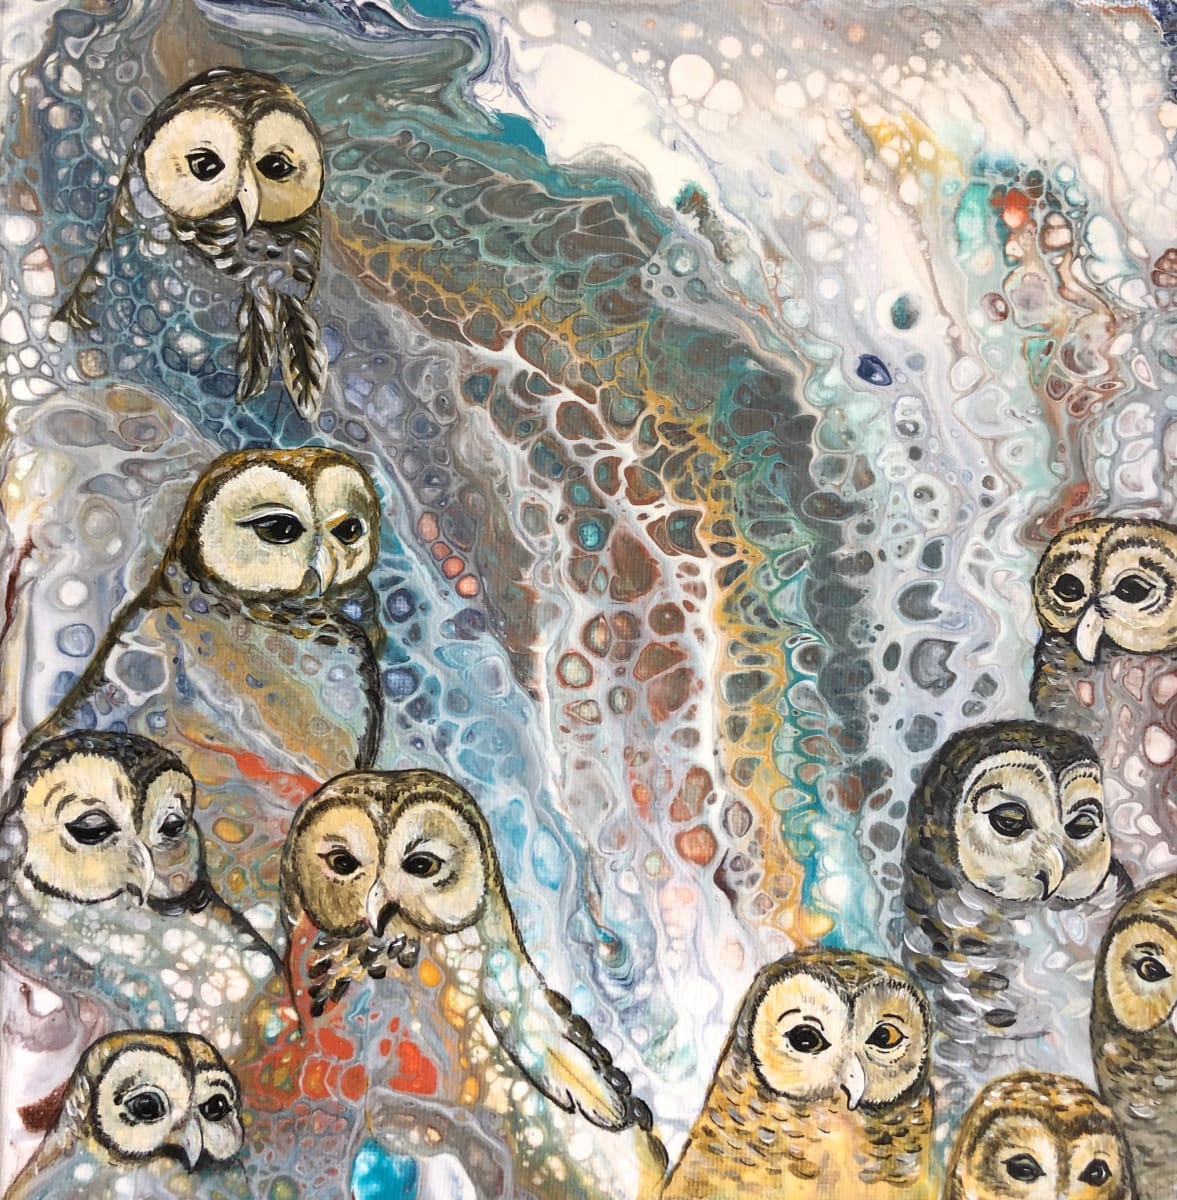 Owls Emerging by Linda Bridges  Image: Owls Emerging